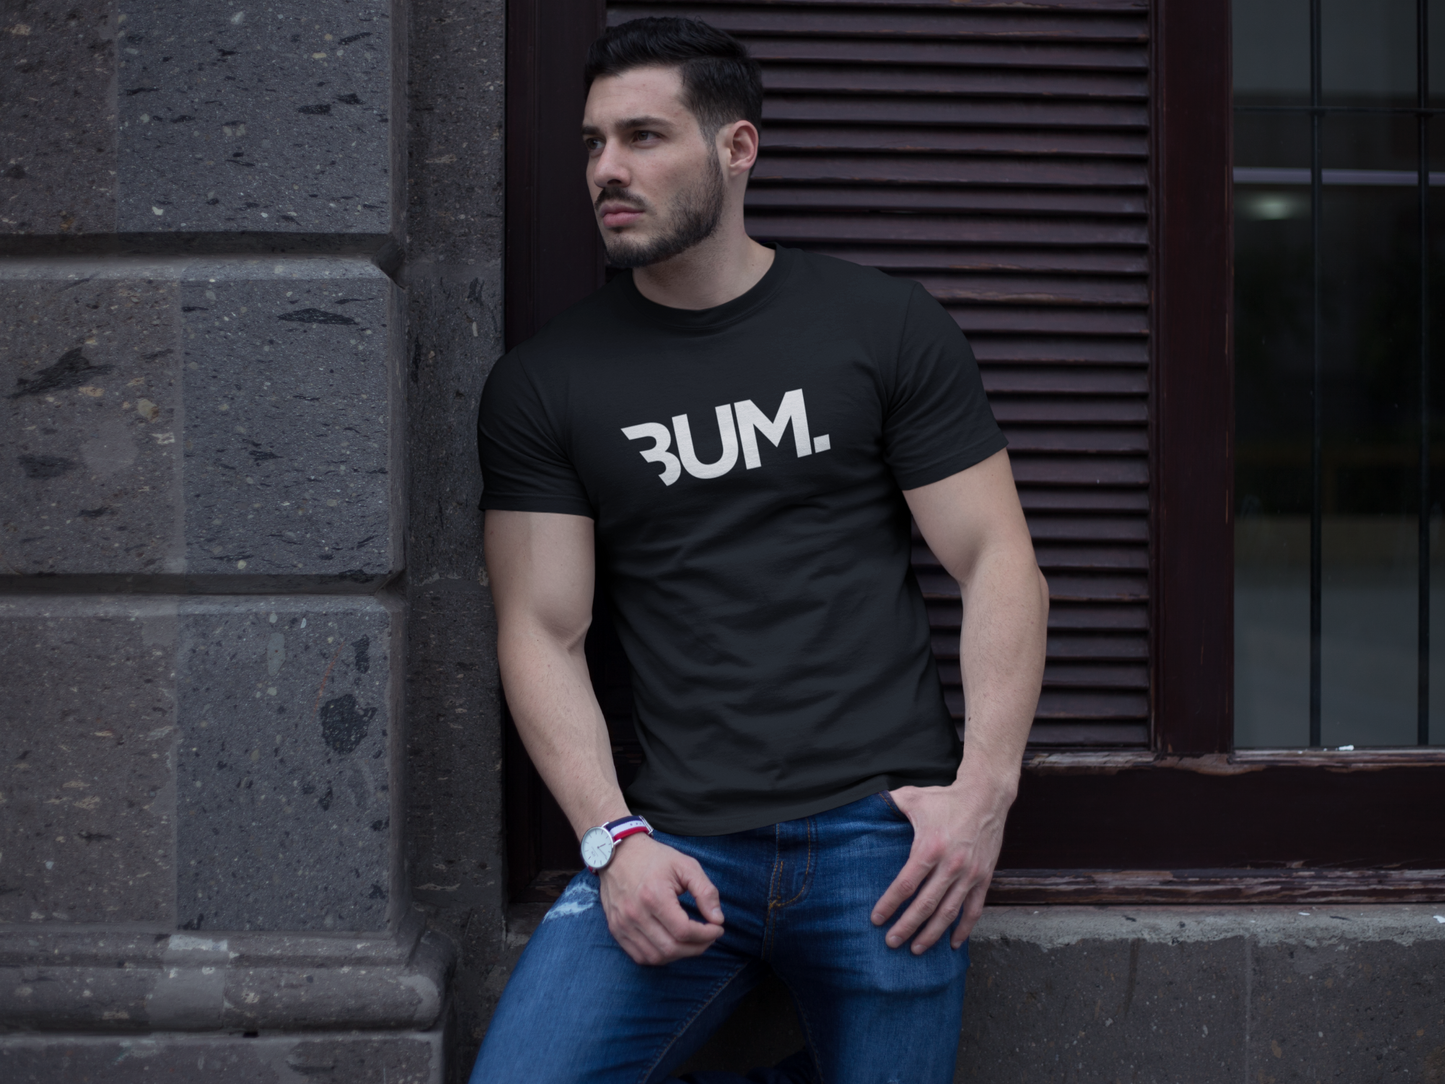 Bum. | Cbum Fitness Black T-Shirt